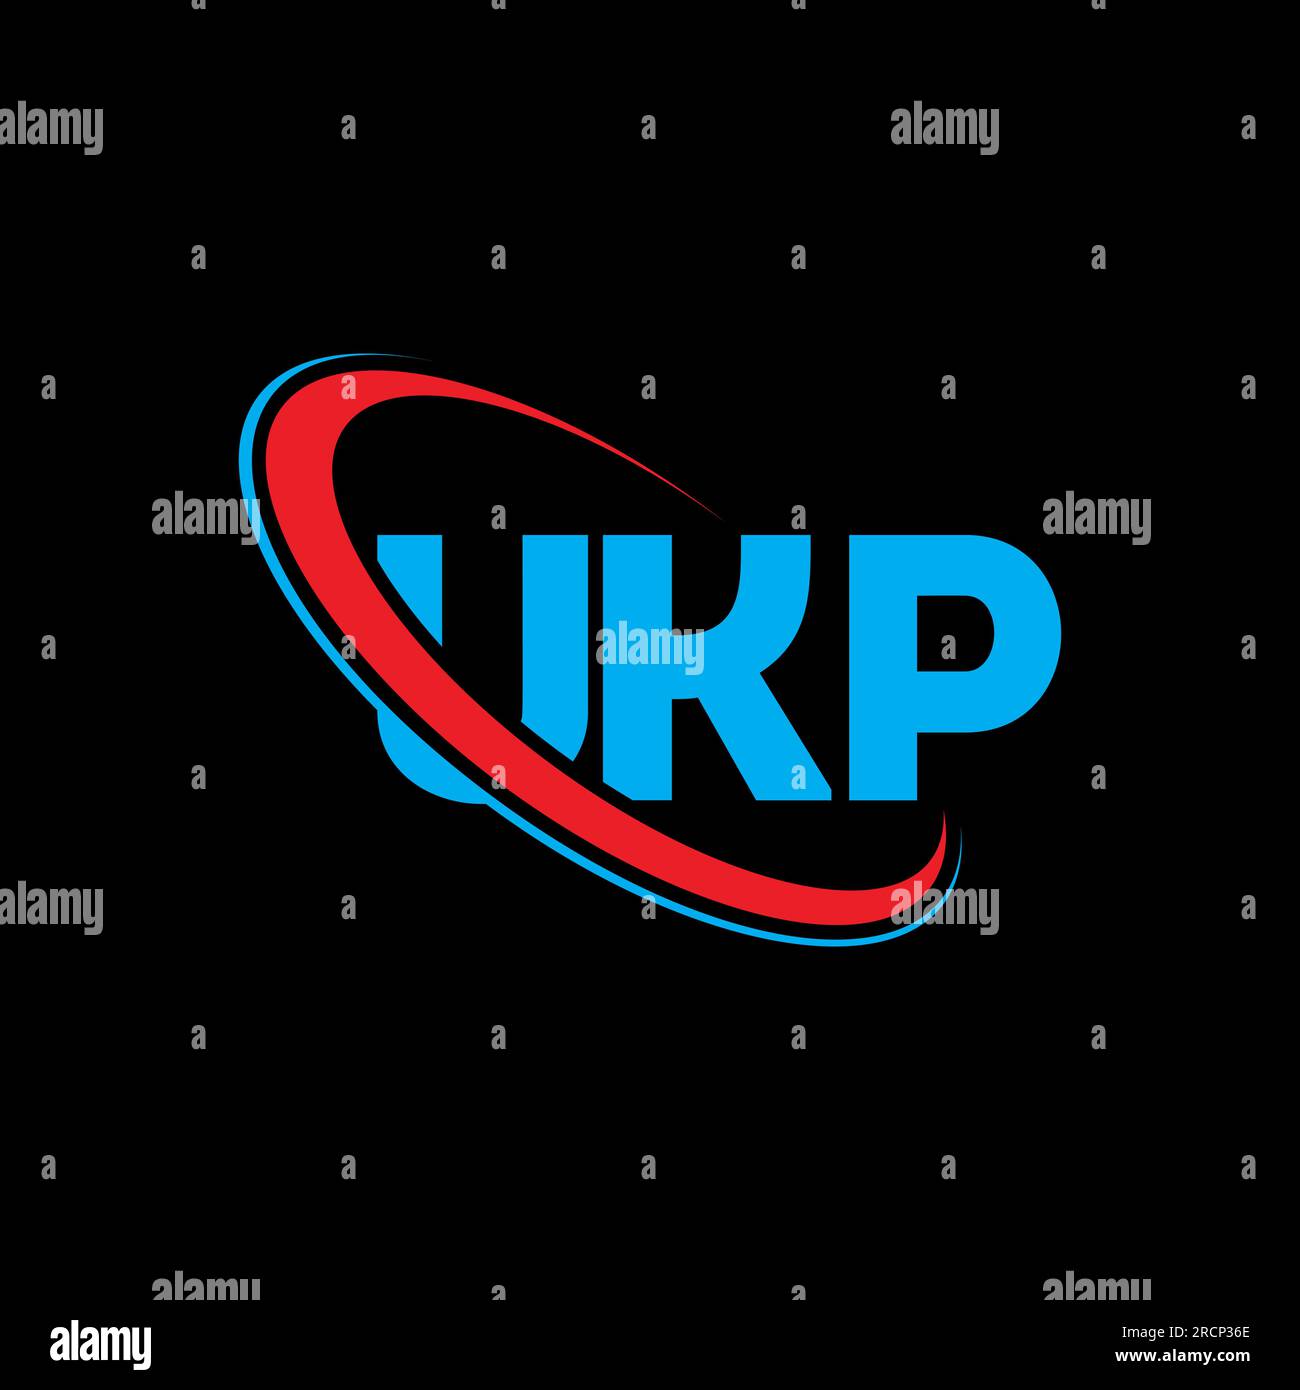 UKP logo. UKP letter. UKP letter logo design. Initials UKP logo linked with circle and uppercase monogram logo. UKP typography for technology, busines Stock Vector